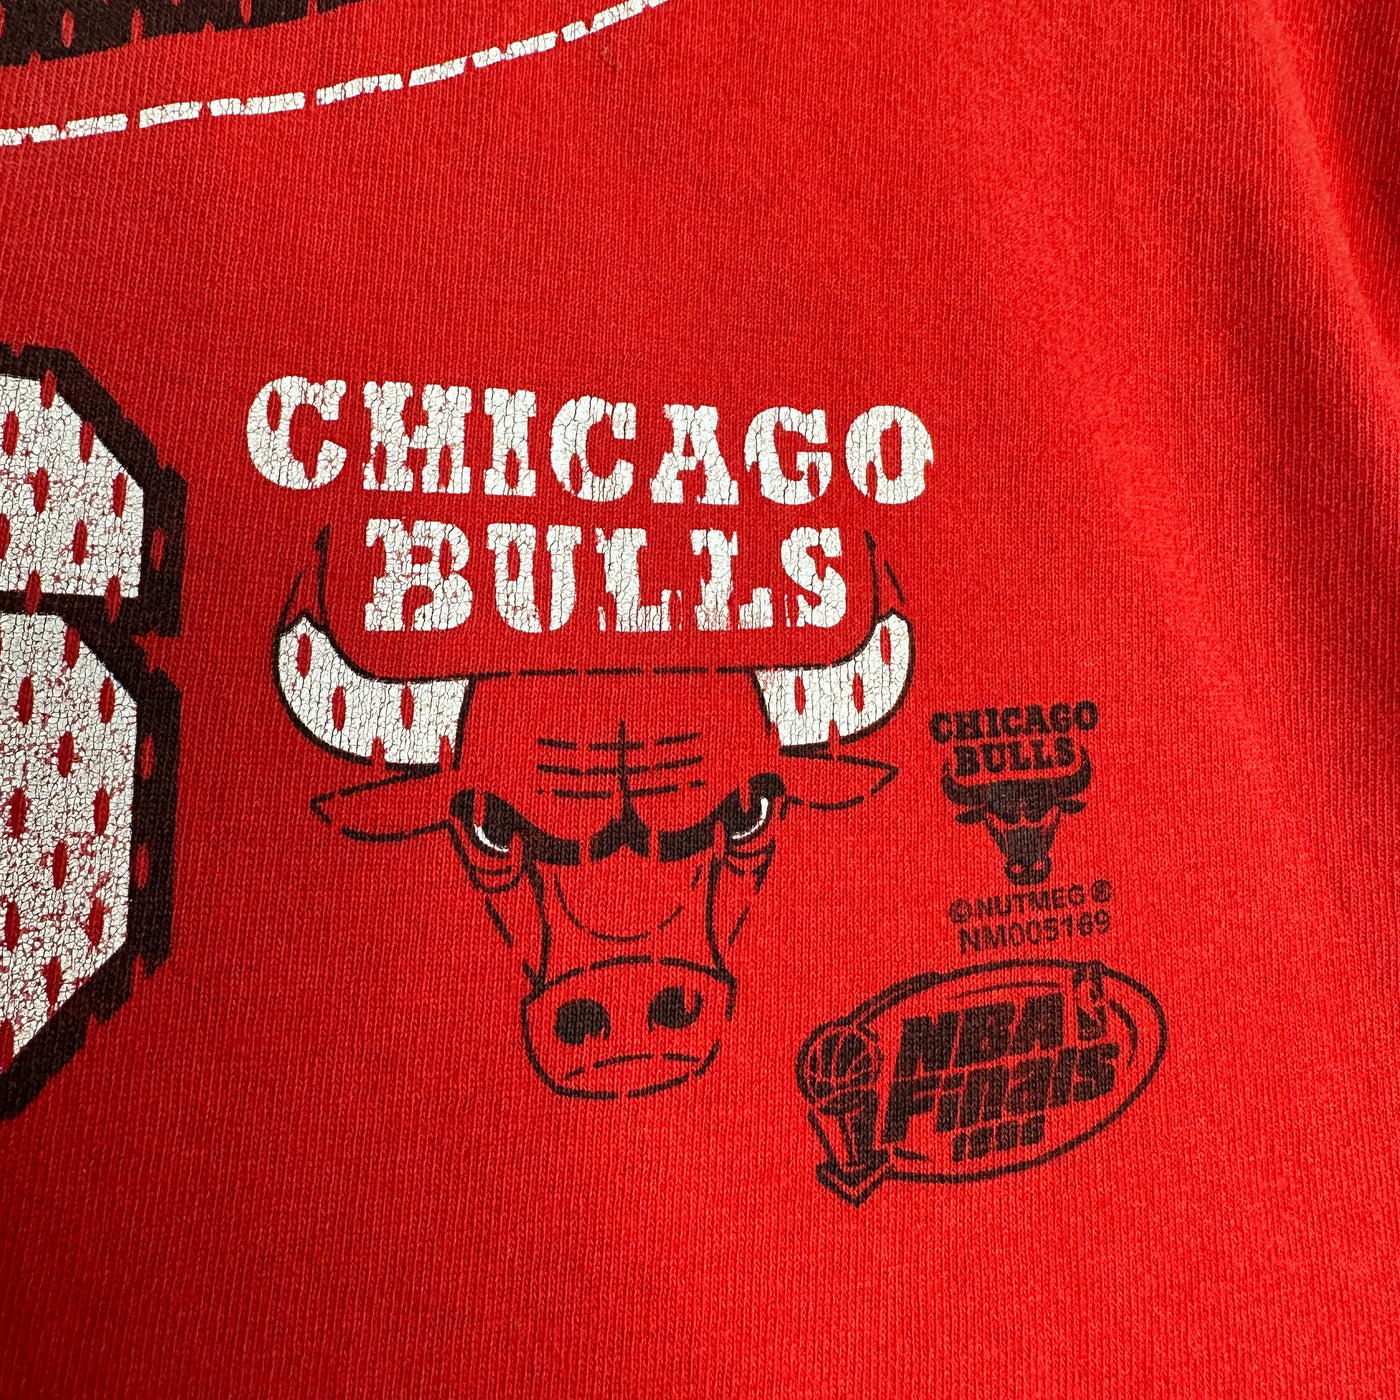 '96 NBA Finals Champions Chicago Bulls Red Sports T-shirt sz M